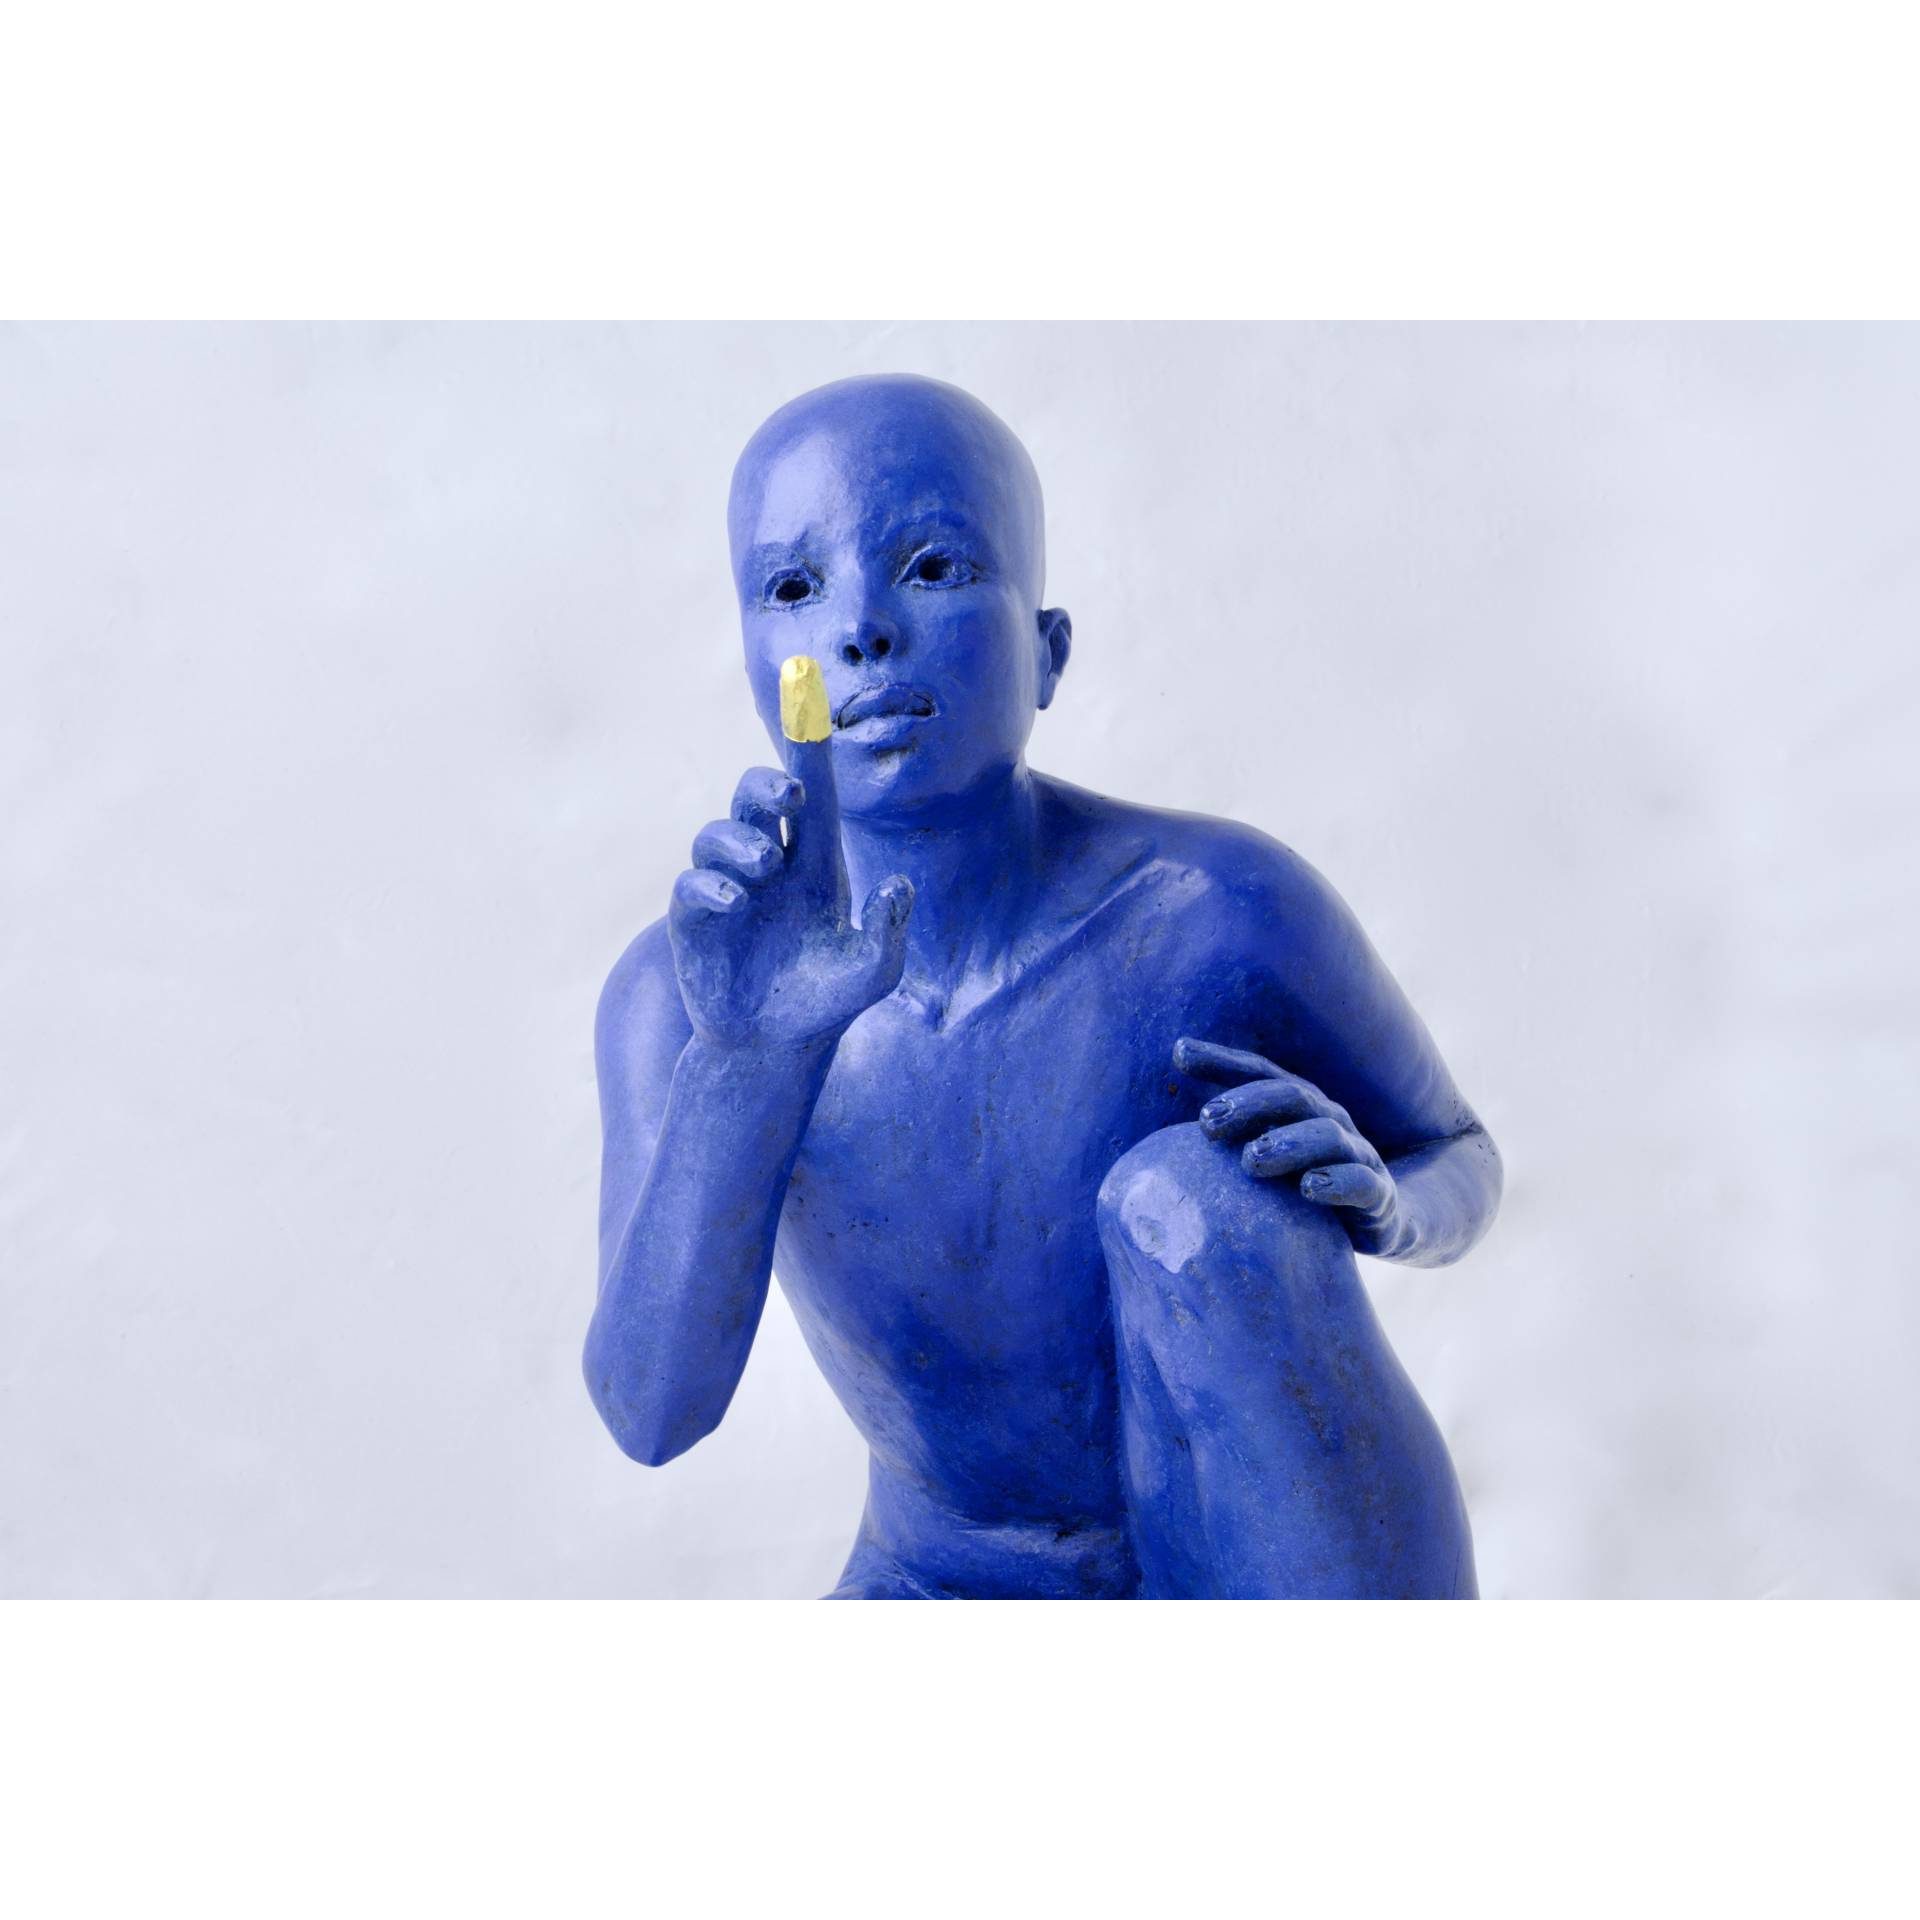 Claude JUSTAMON, Convergence, patine bleue, bronze, 34 x 32 x 20 cm